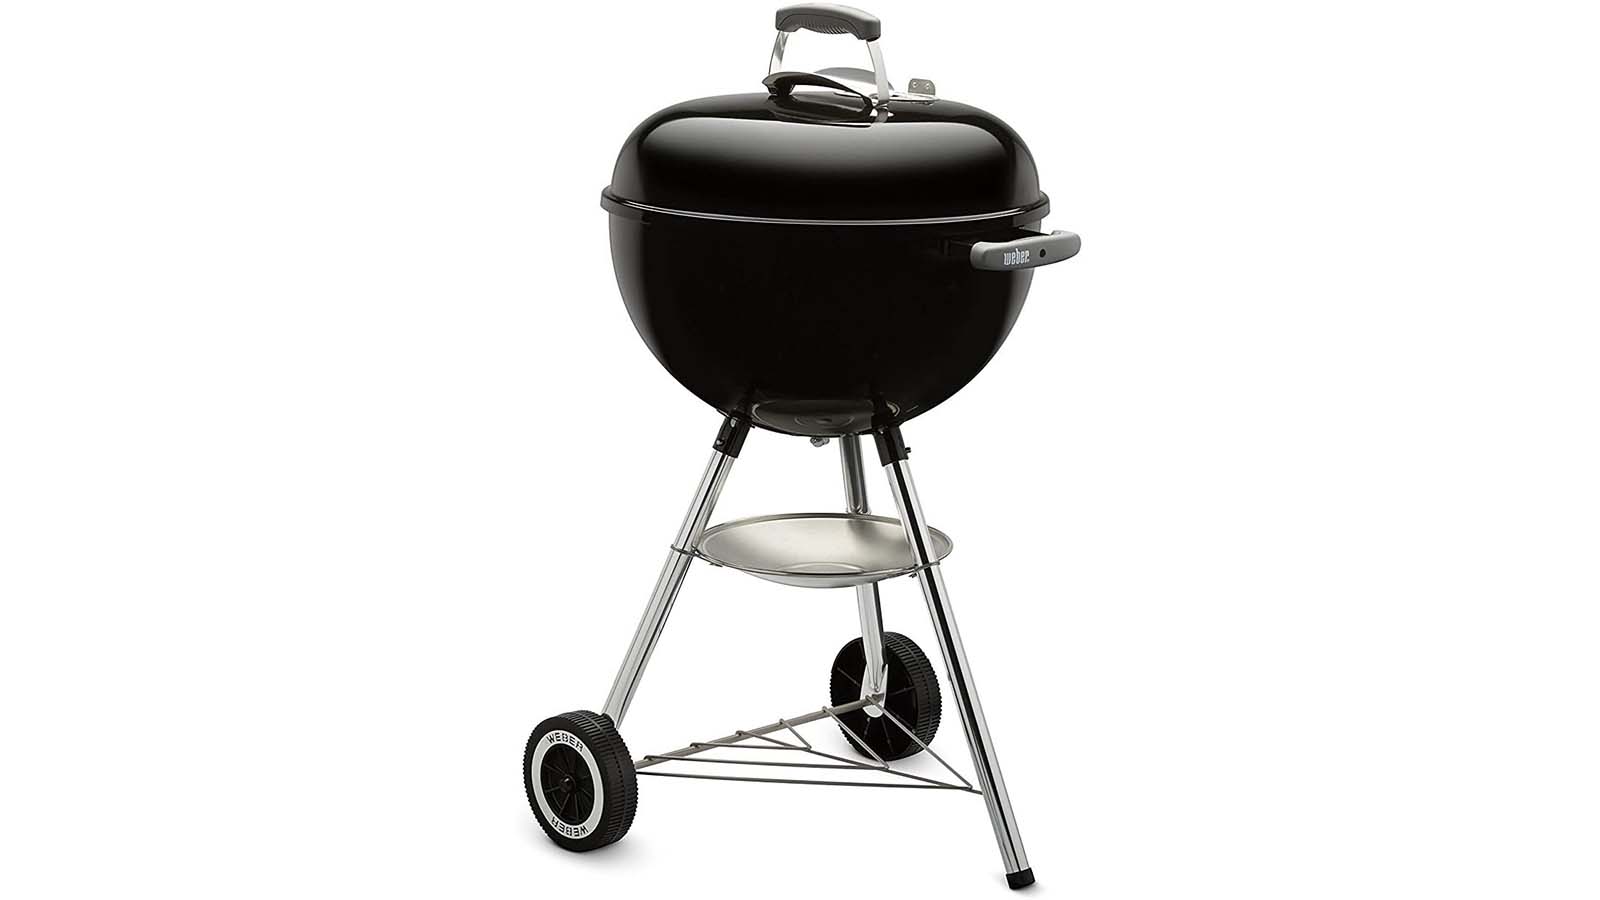 https://media.cnn.com/api/v1/images/stellar/prod/220608191015-amazon-weber-original-kettle-18-inch-charcoal-grill.jpg?c=original